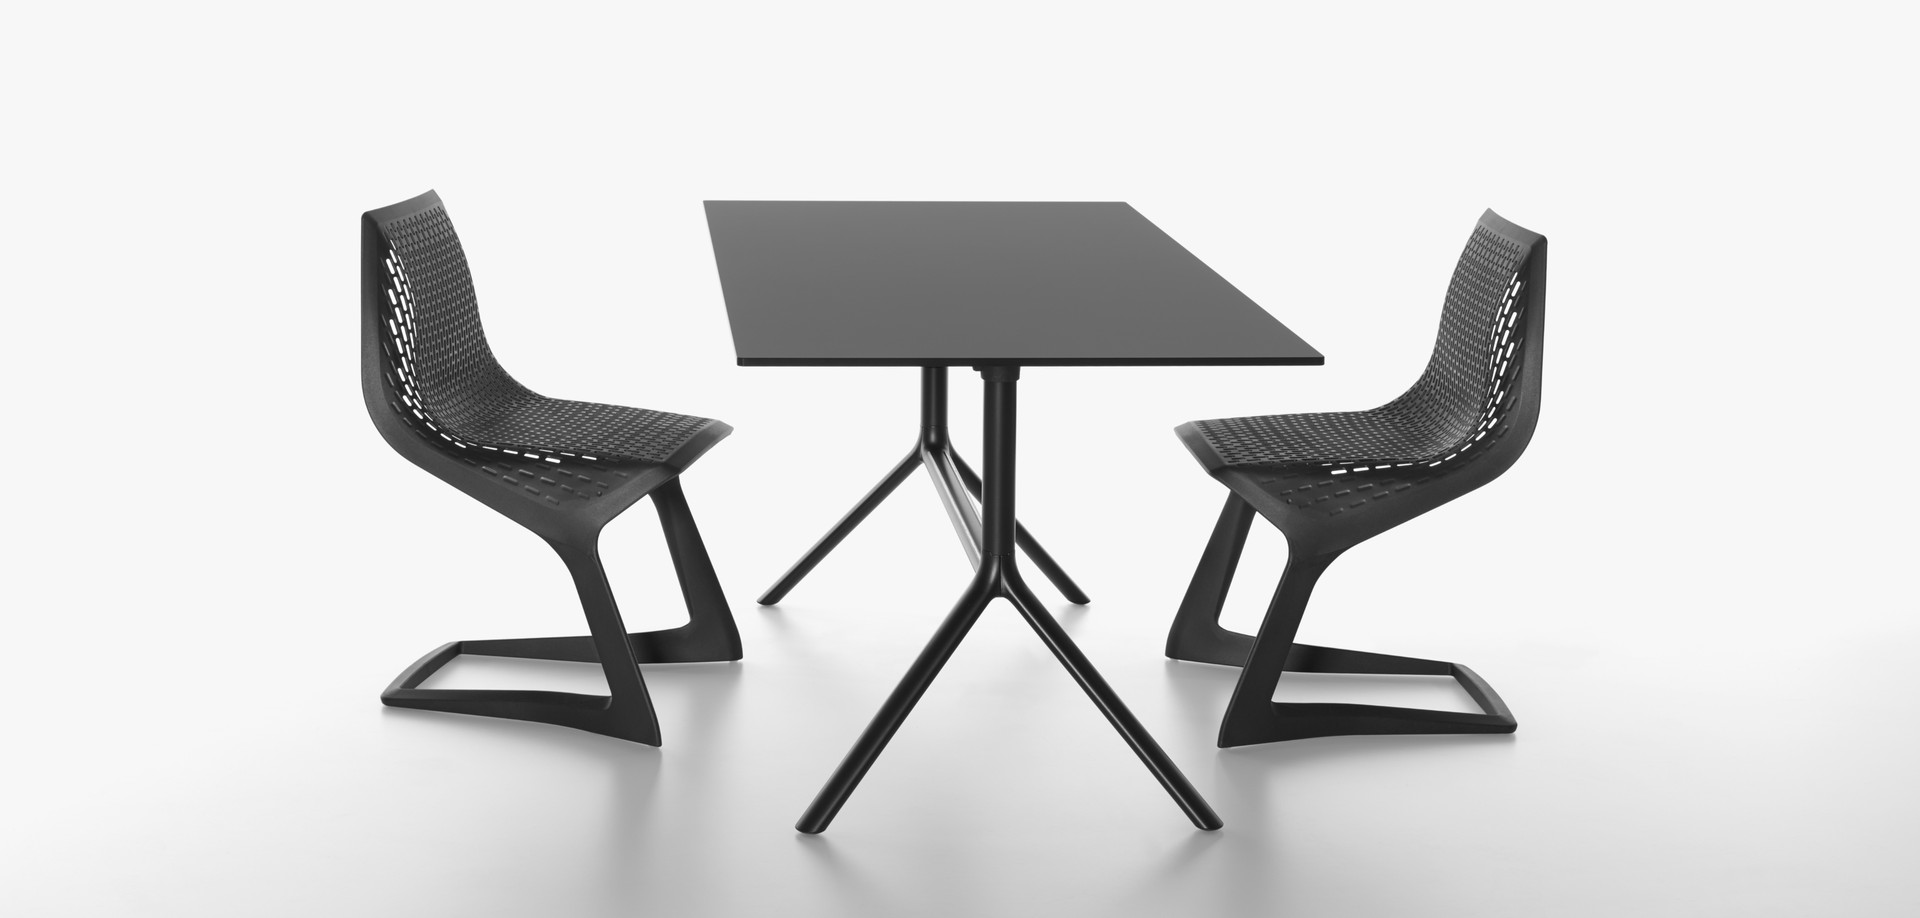 Plank - MIURA table rectangular table top, 73 cm high, black. Myto chair.